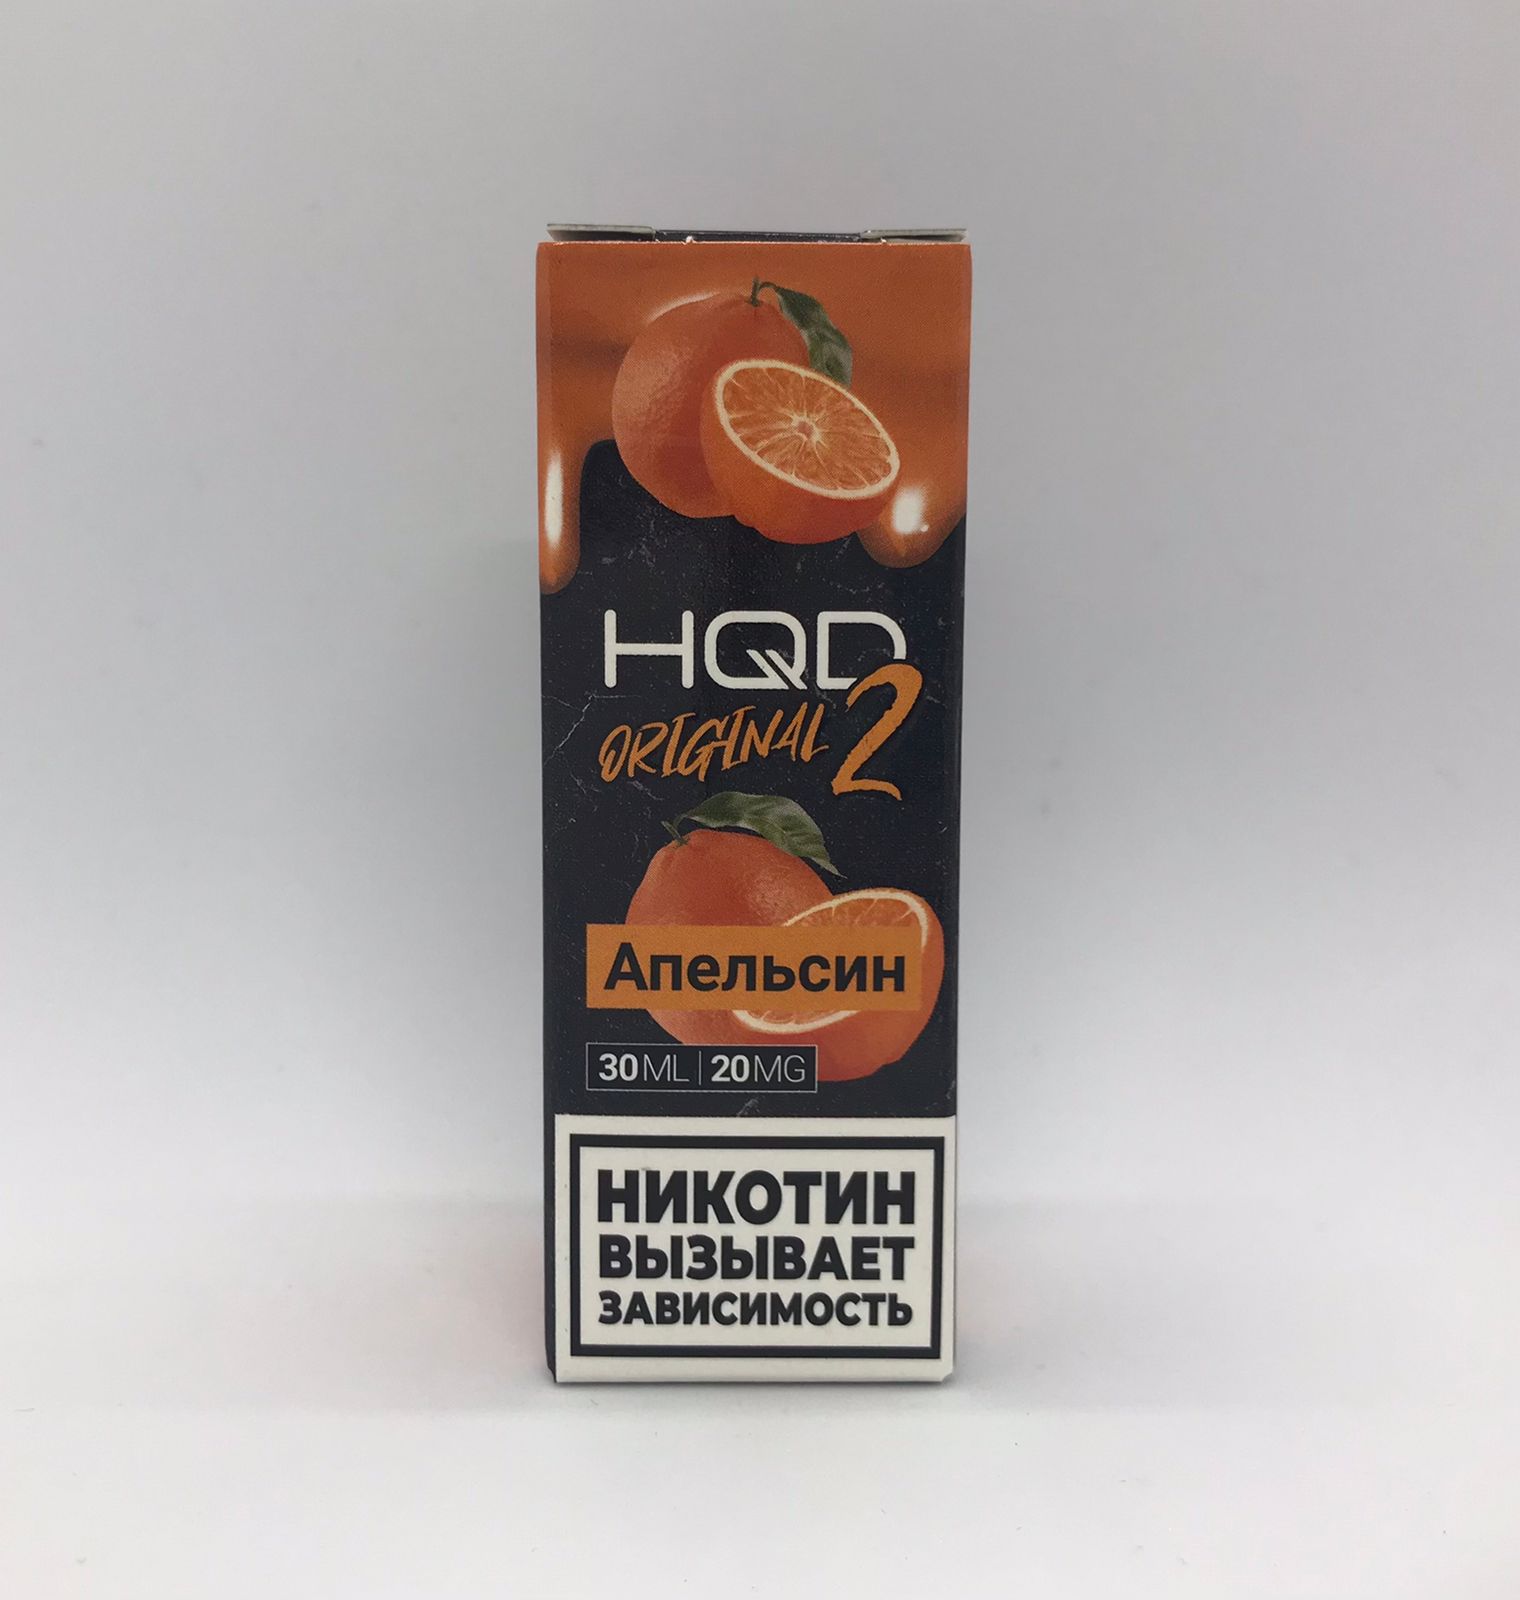 HQD ORIGINAL 2.0 / Апельсин